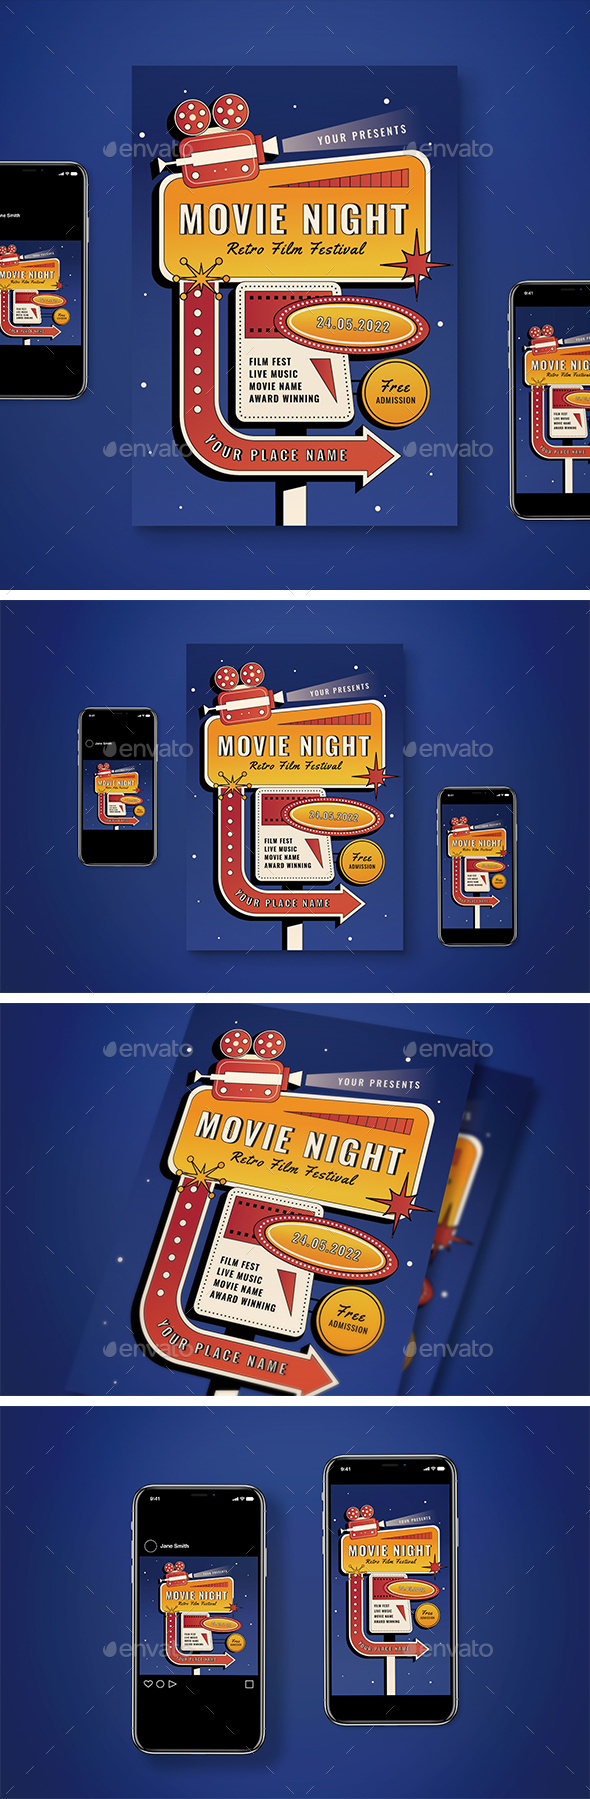 Movie Night Flyer Pack